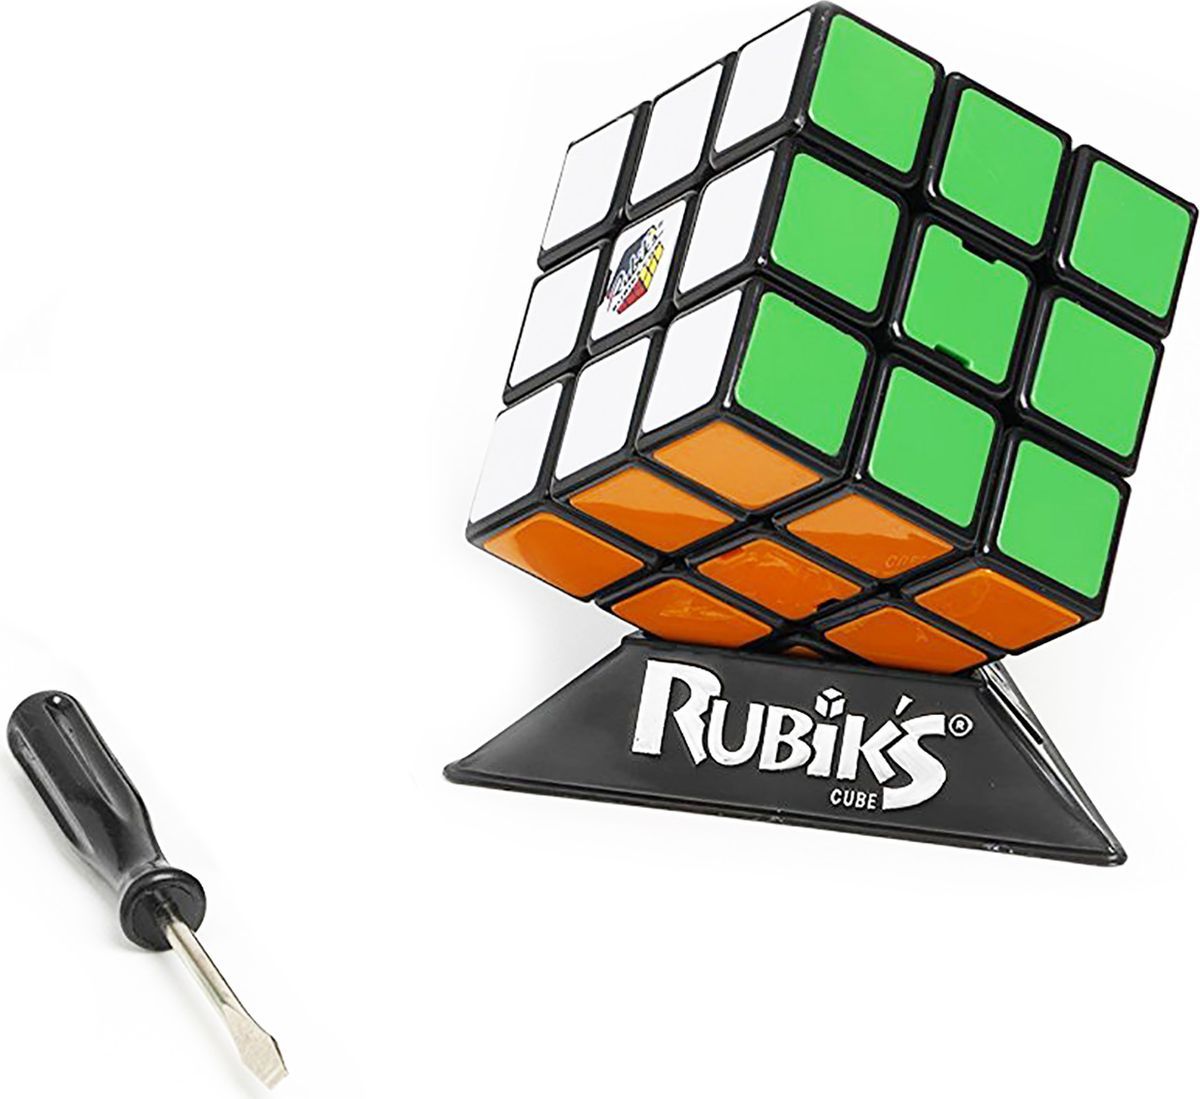 Rubik's        